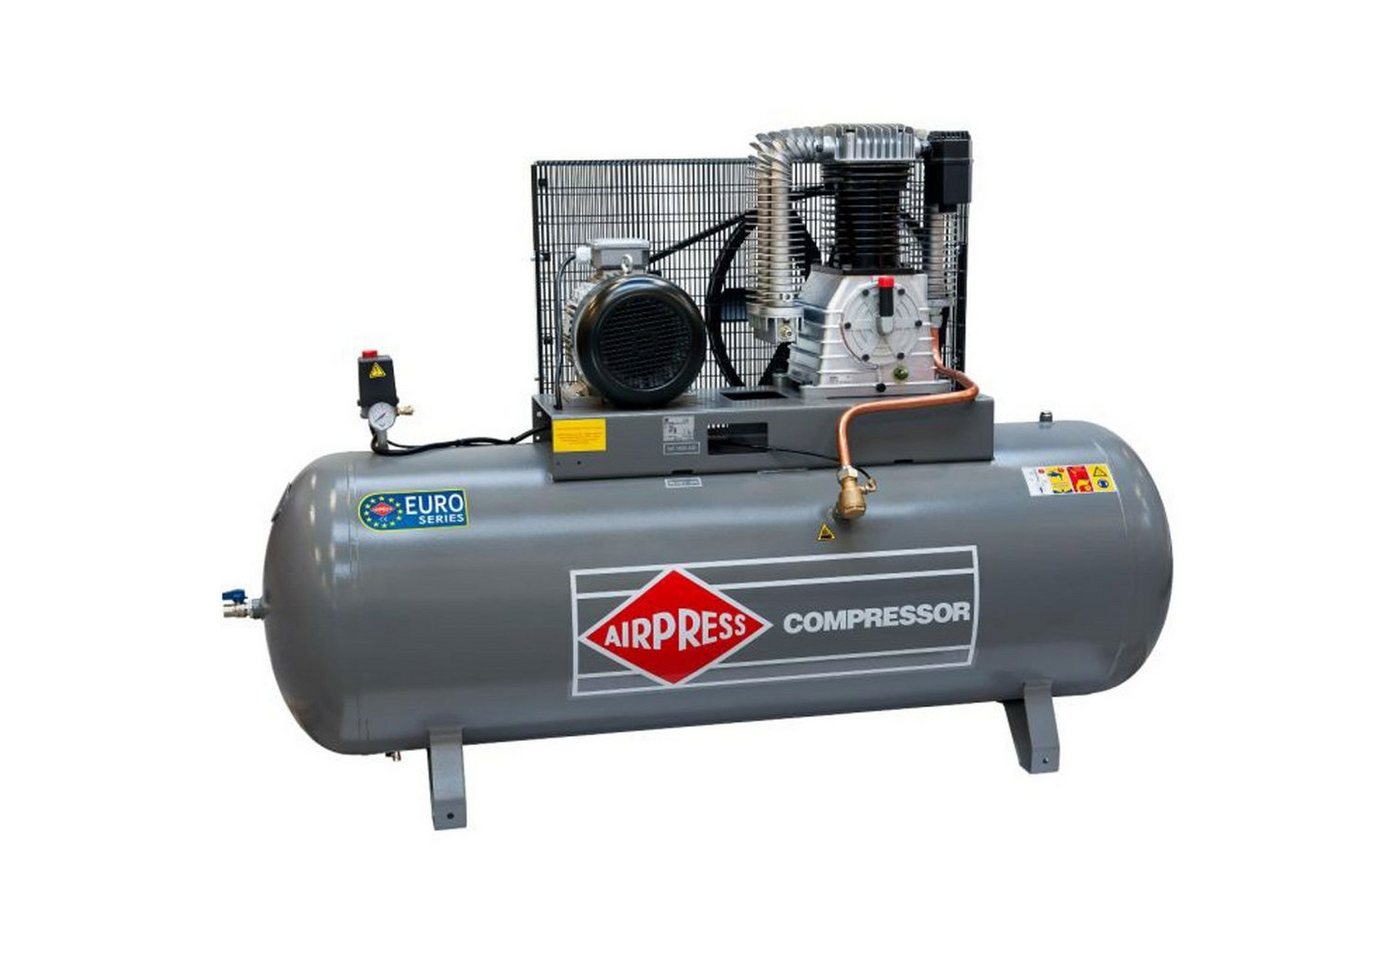 Airpress Kompressor Druckluft- Kompressor 10 PS 500 Liter 11 bar HK 1500-500 Typ 360673, max. 11 bar, 500 l, 1 Stück von Airpress